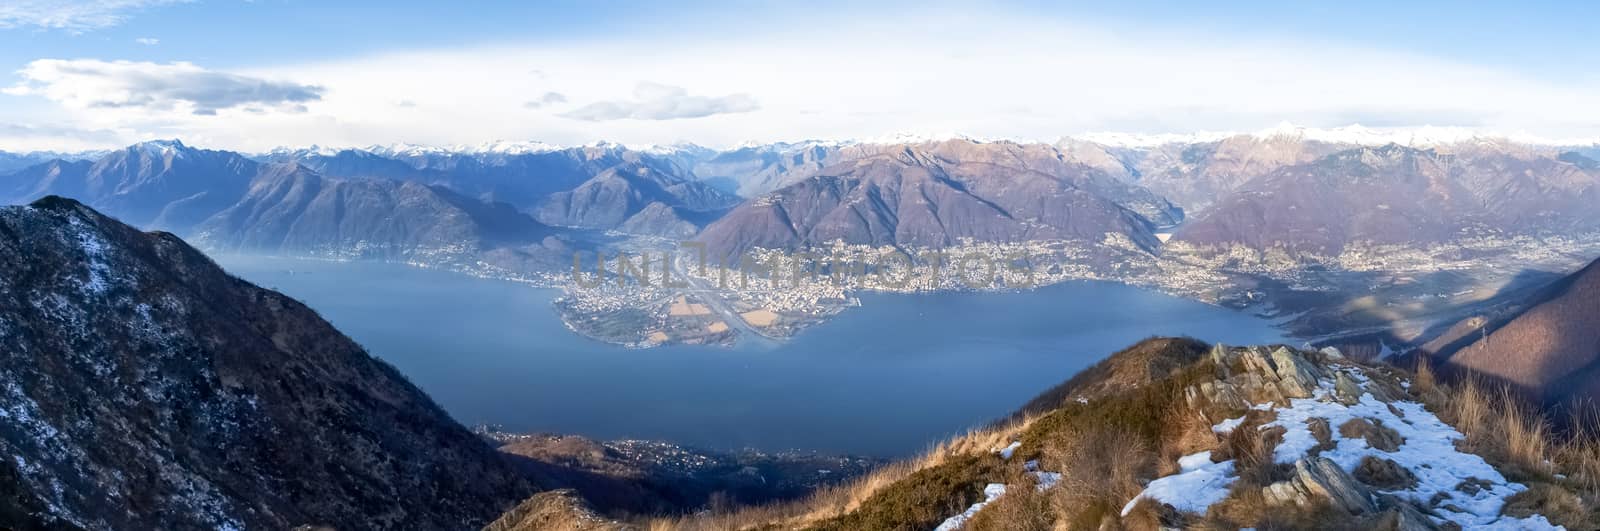 Gambarogno, Switzerland: Trail of Mount Gambarogno and views of the mountains and Lake Maggiore